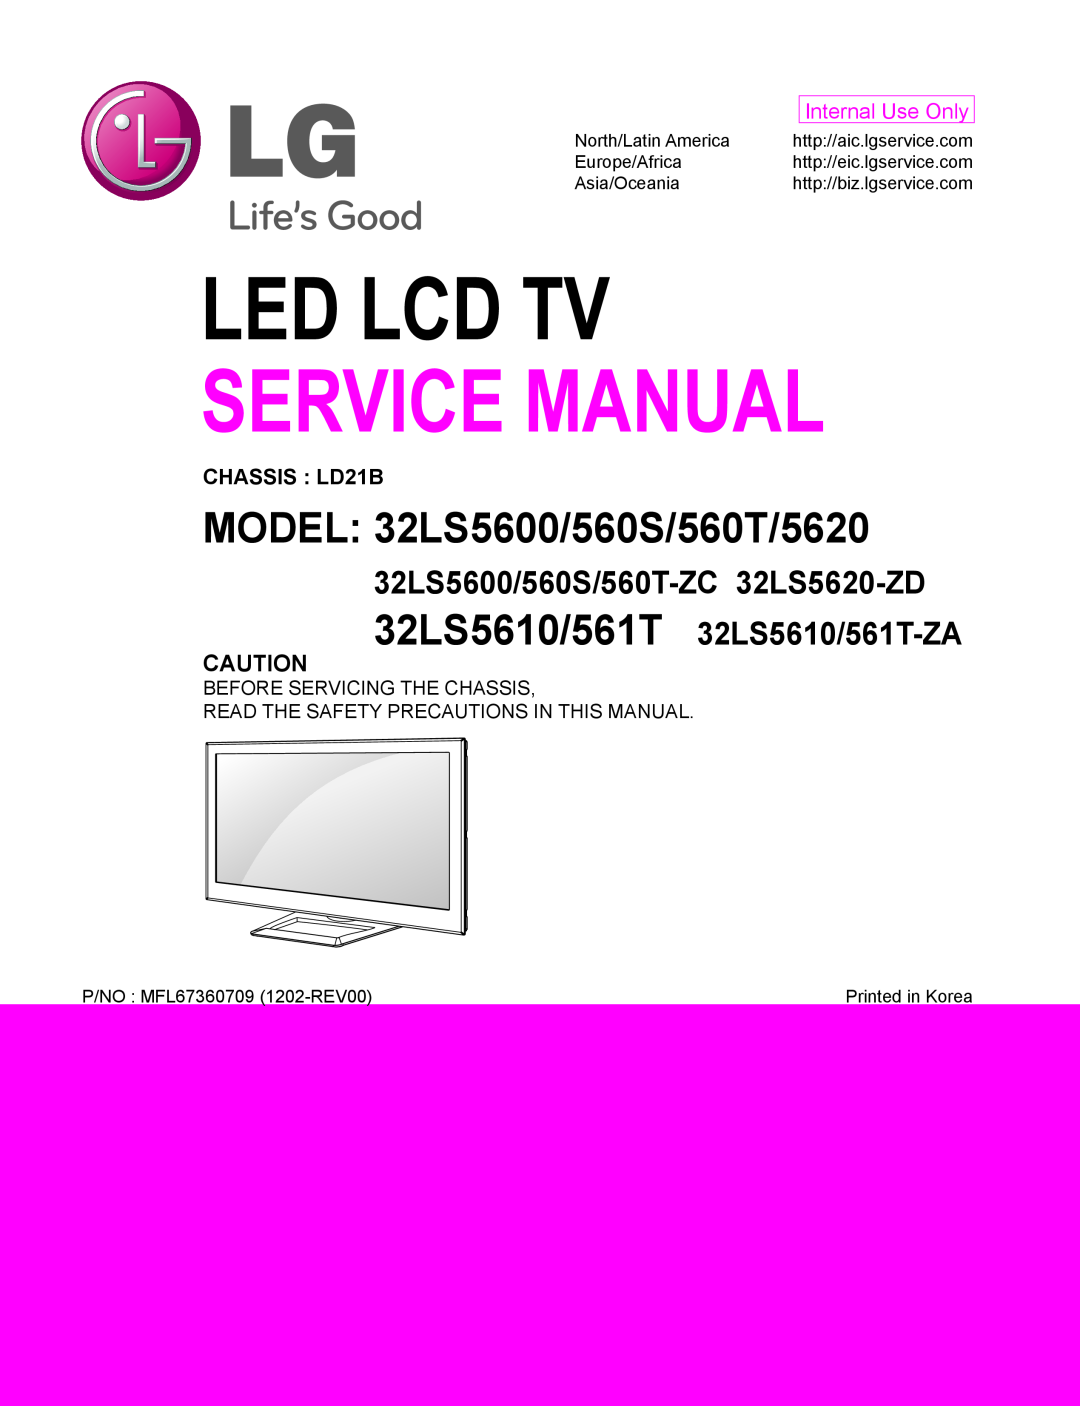 LG Electronics 32LS5610/561T service manual CHASSIS LD21B, Led Lcd Tv, Service Manual, MODEL 32LS5600/560S/560T/5620 